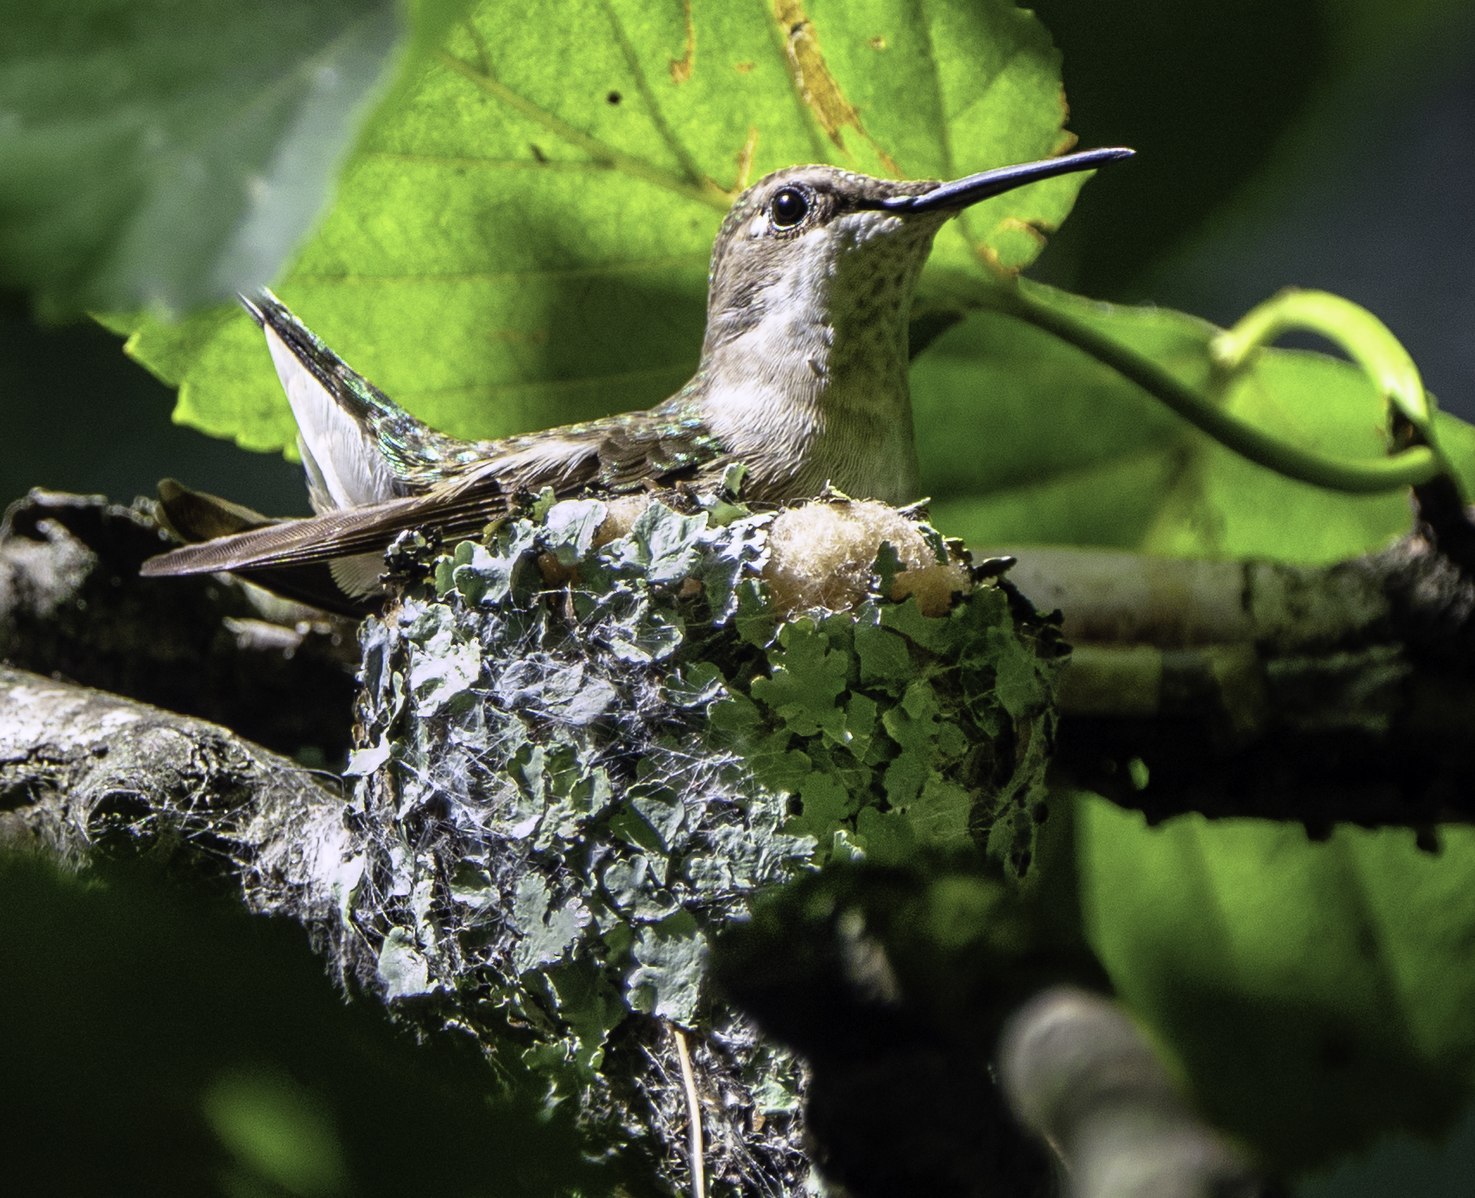 Un colibrí garganta rubí hembra en proceso de construcción de nidos